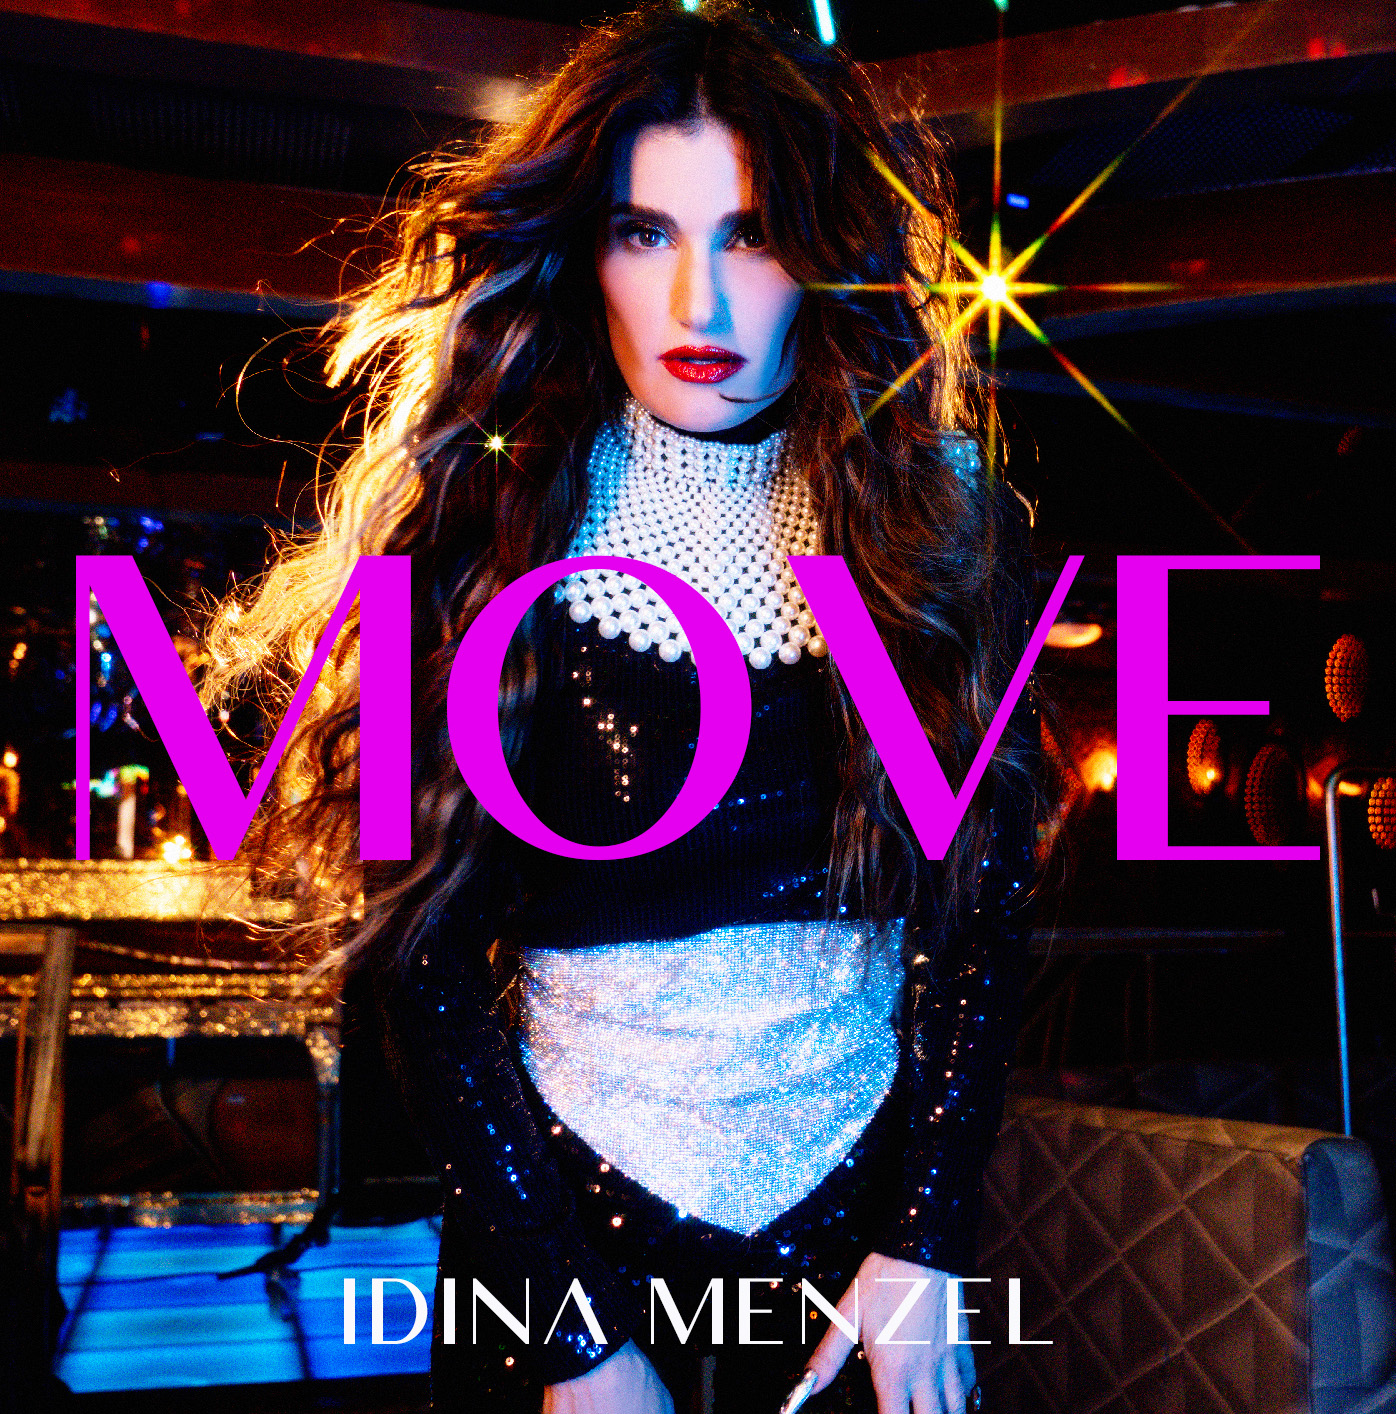 Idina Menzel - 'Move' single cover